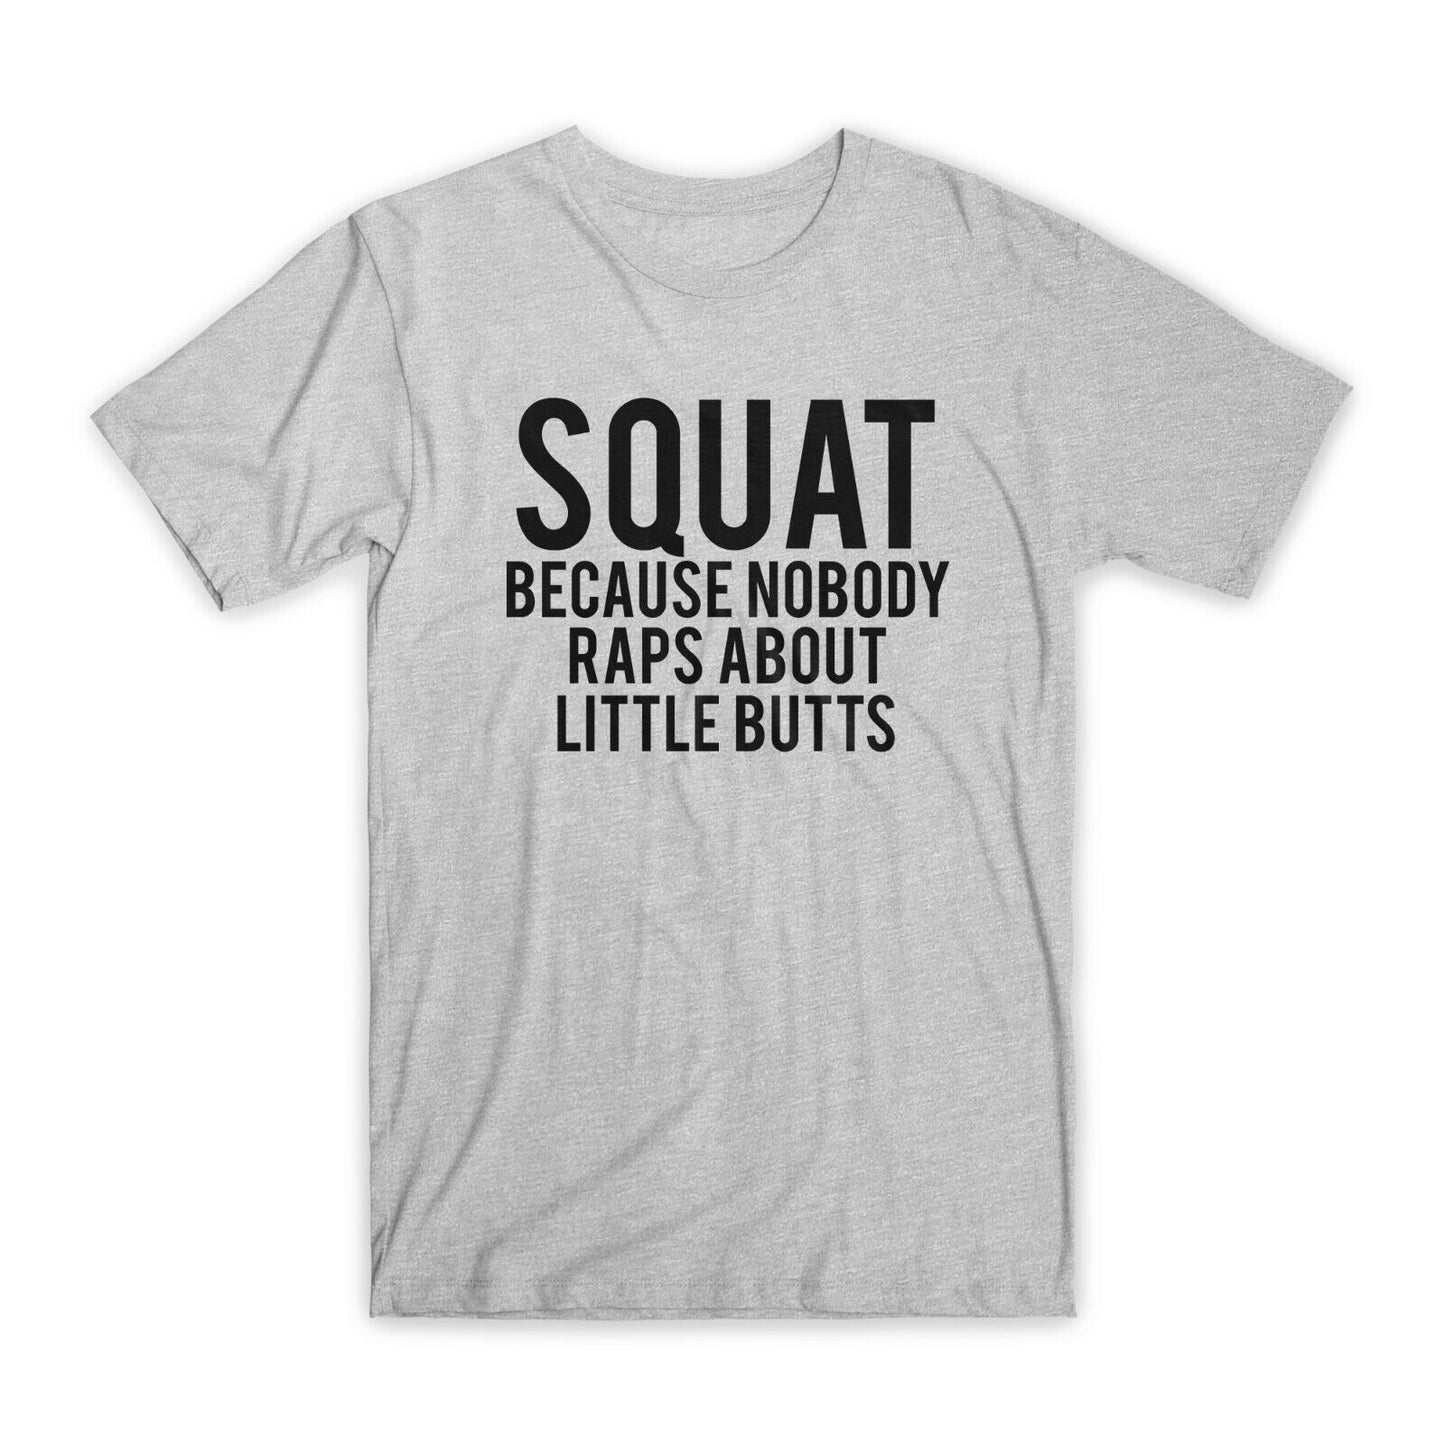 Squat Because Nobody Rap's T-Shirt Premium Cotton Crew Neck Funny Tees Gift NEW